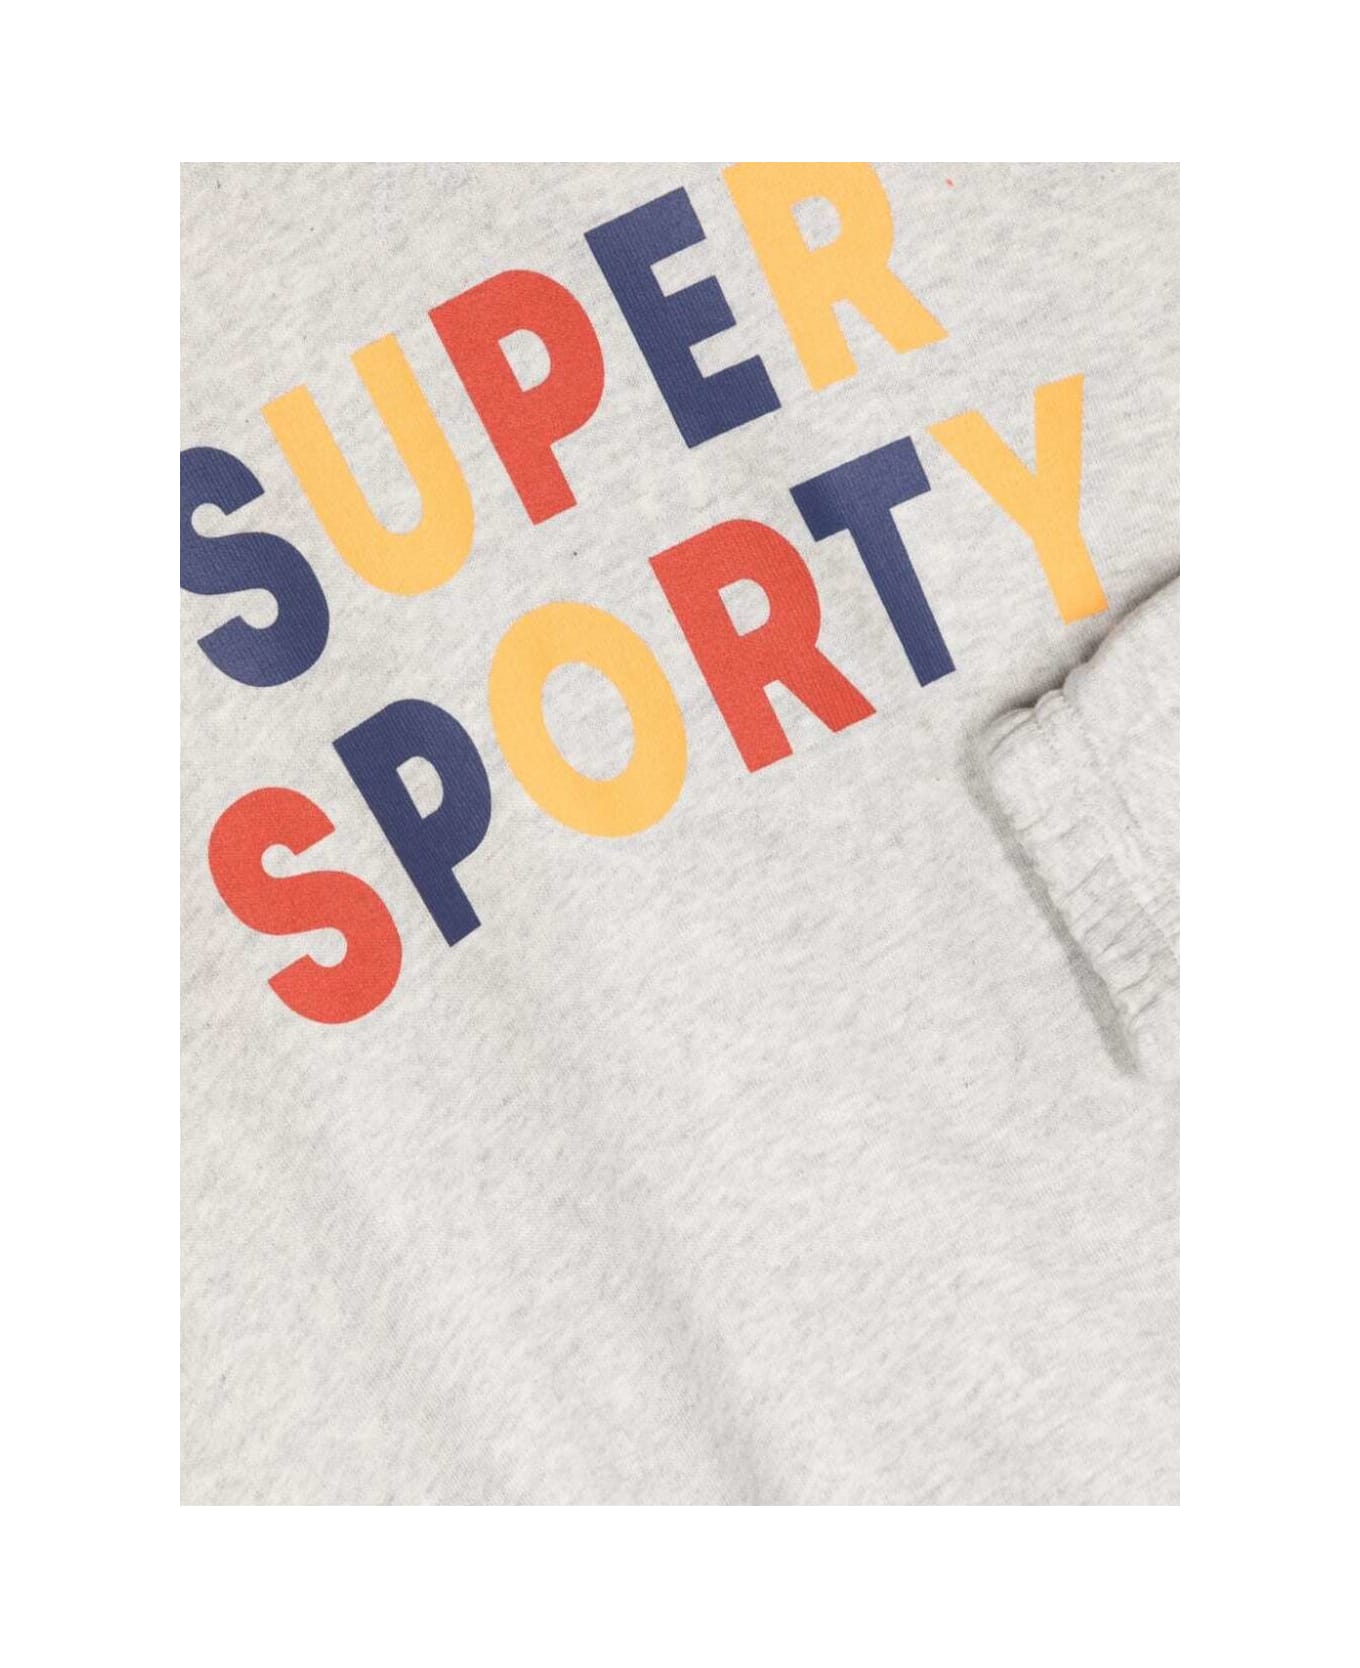 Mini Rodini Grey Crewneck Sweatshirt With Multicolor Super Sporty Print In Cotton Boy - Grey